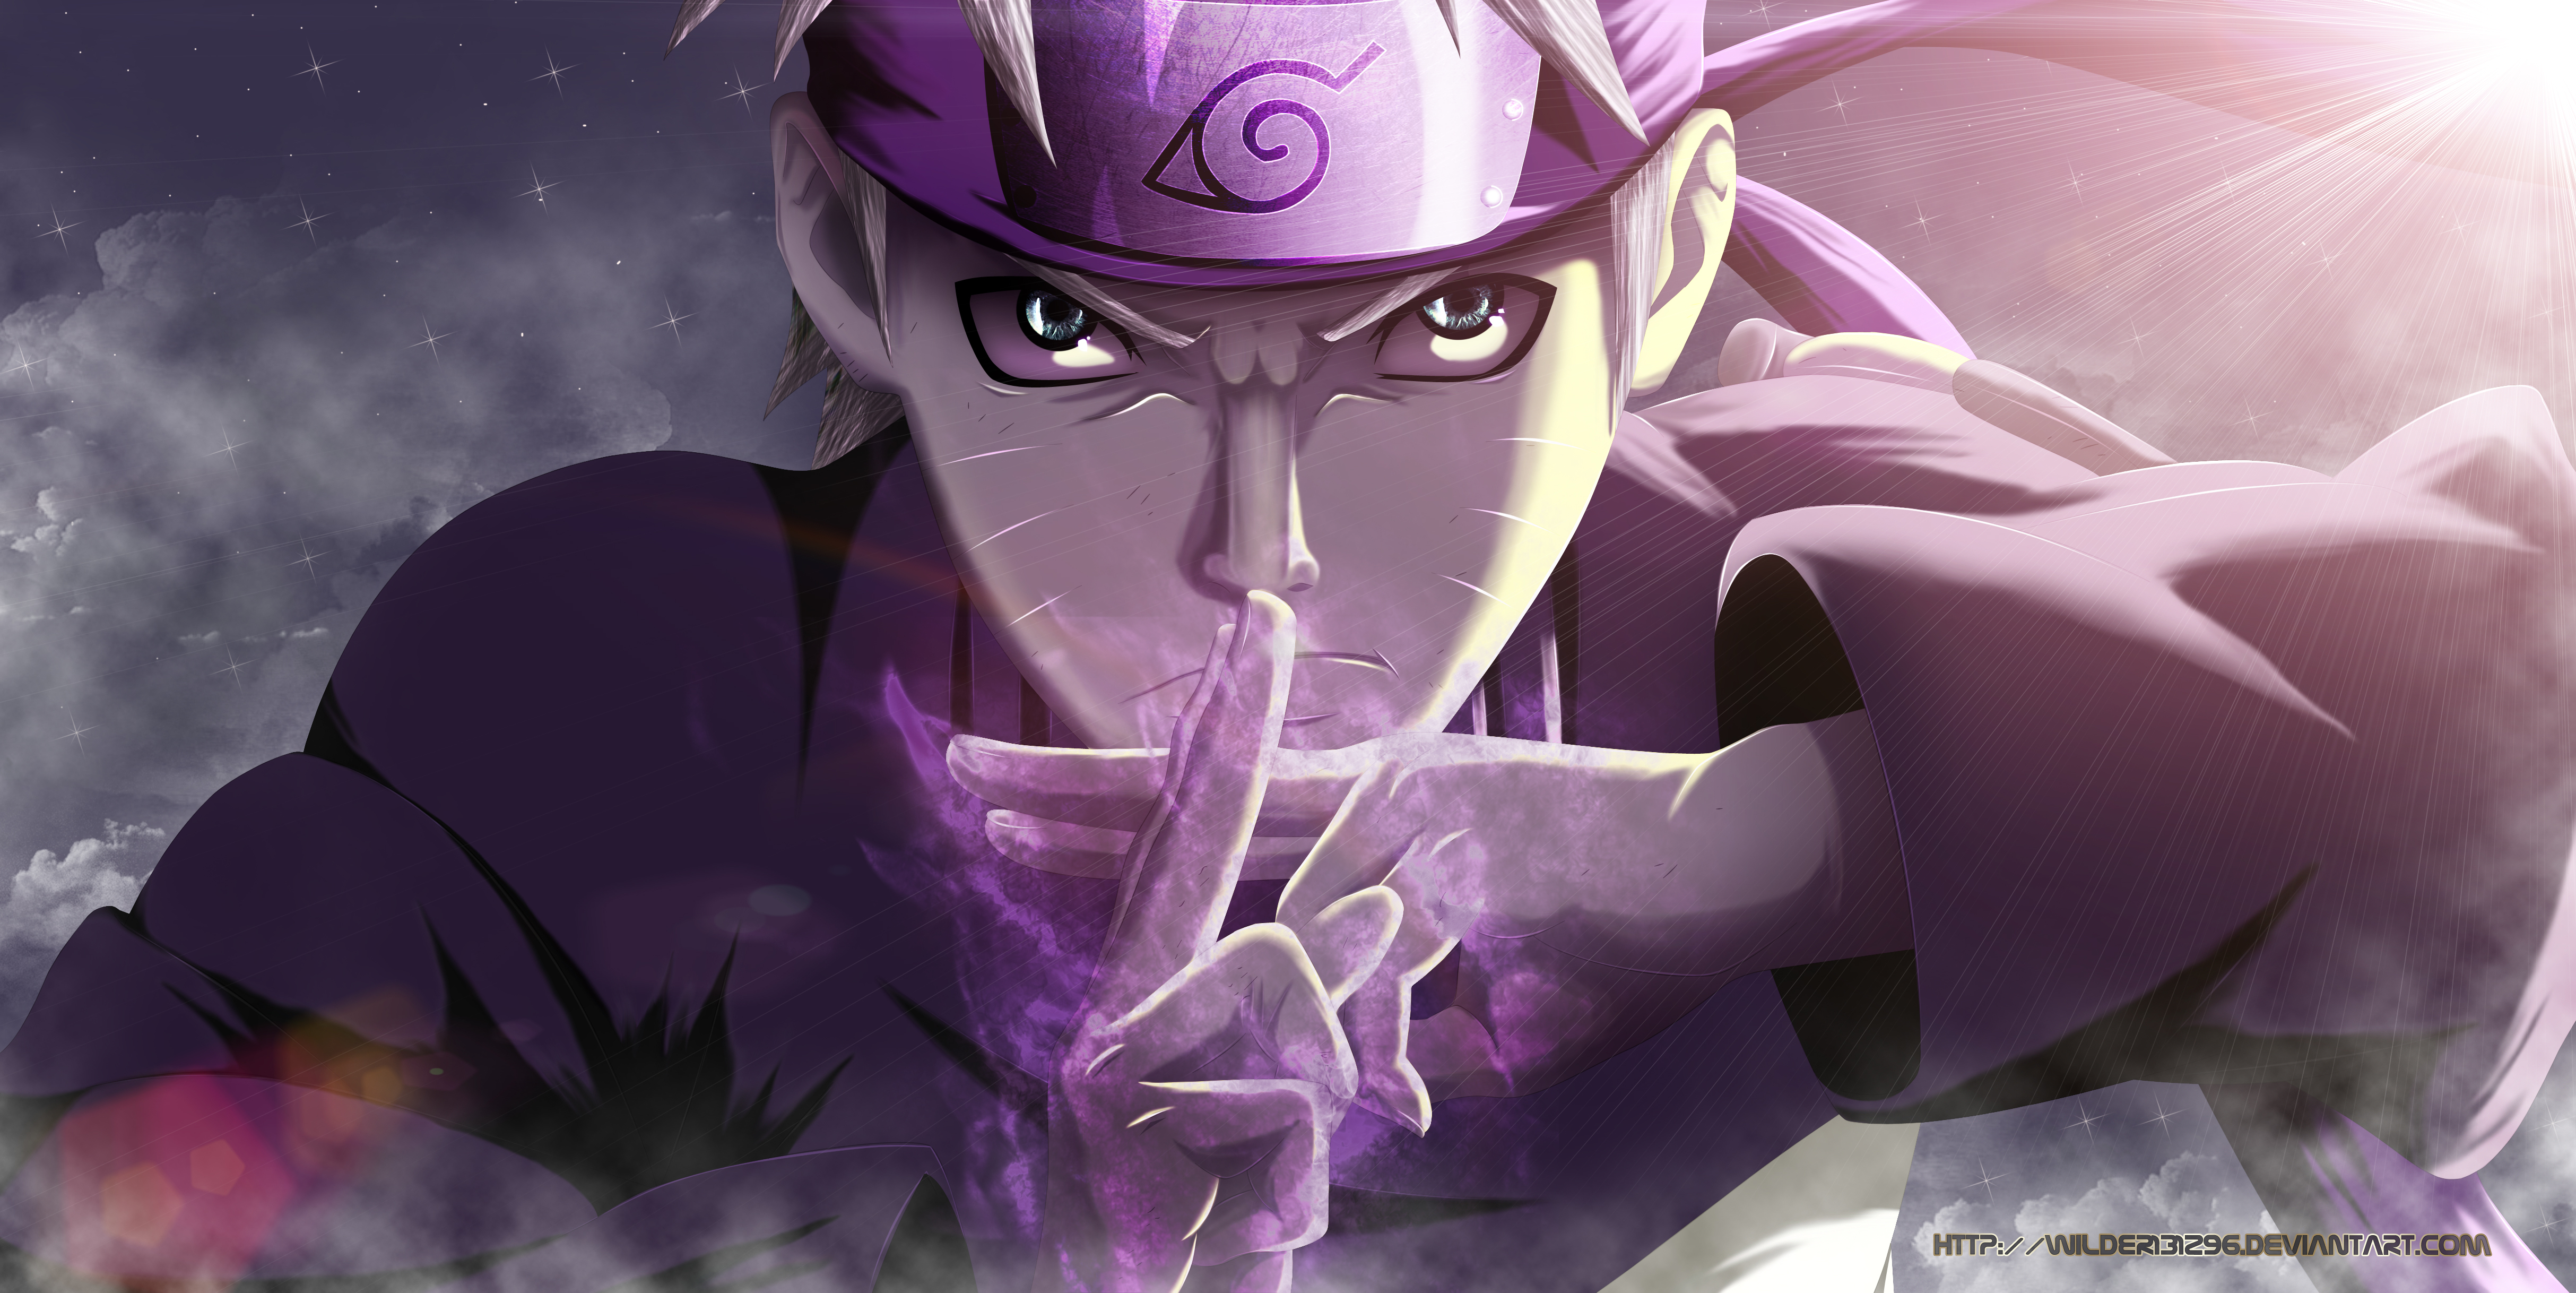 Popular Naruto Uzumaki Image for Phone